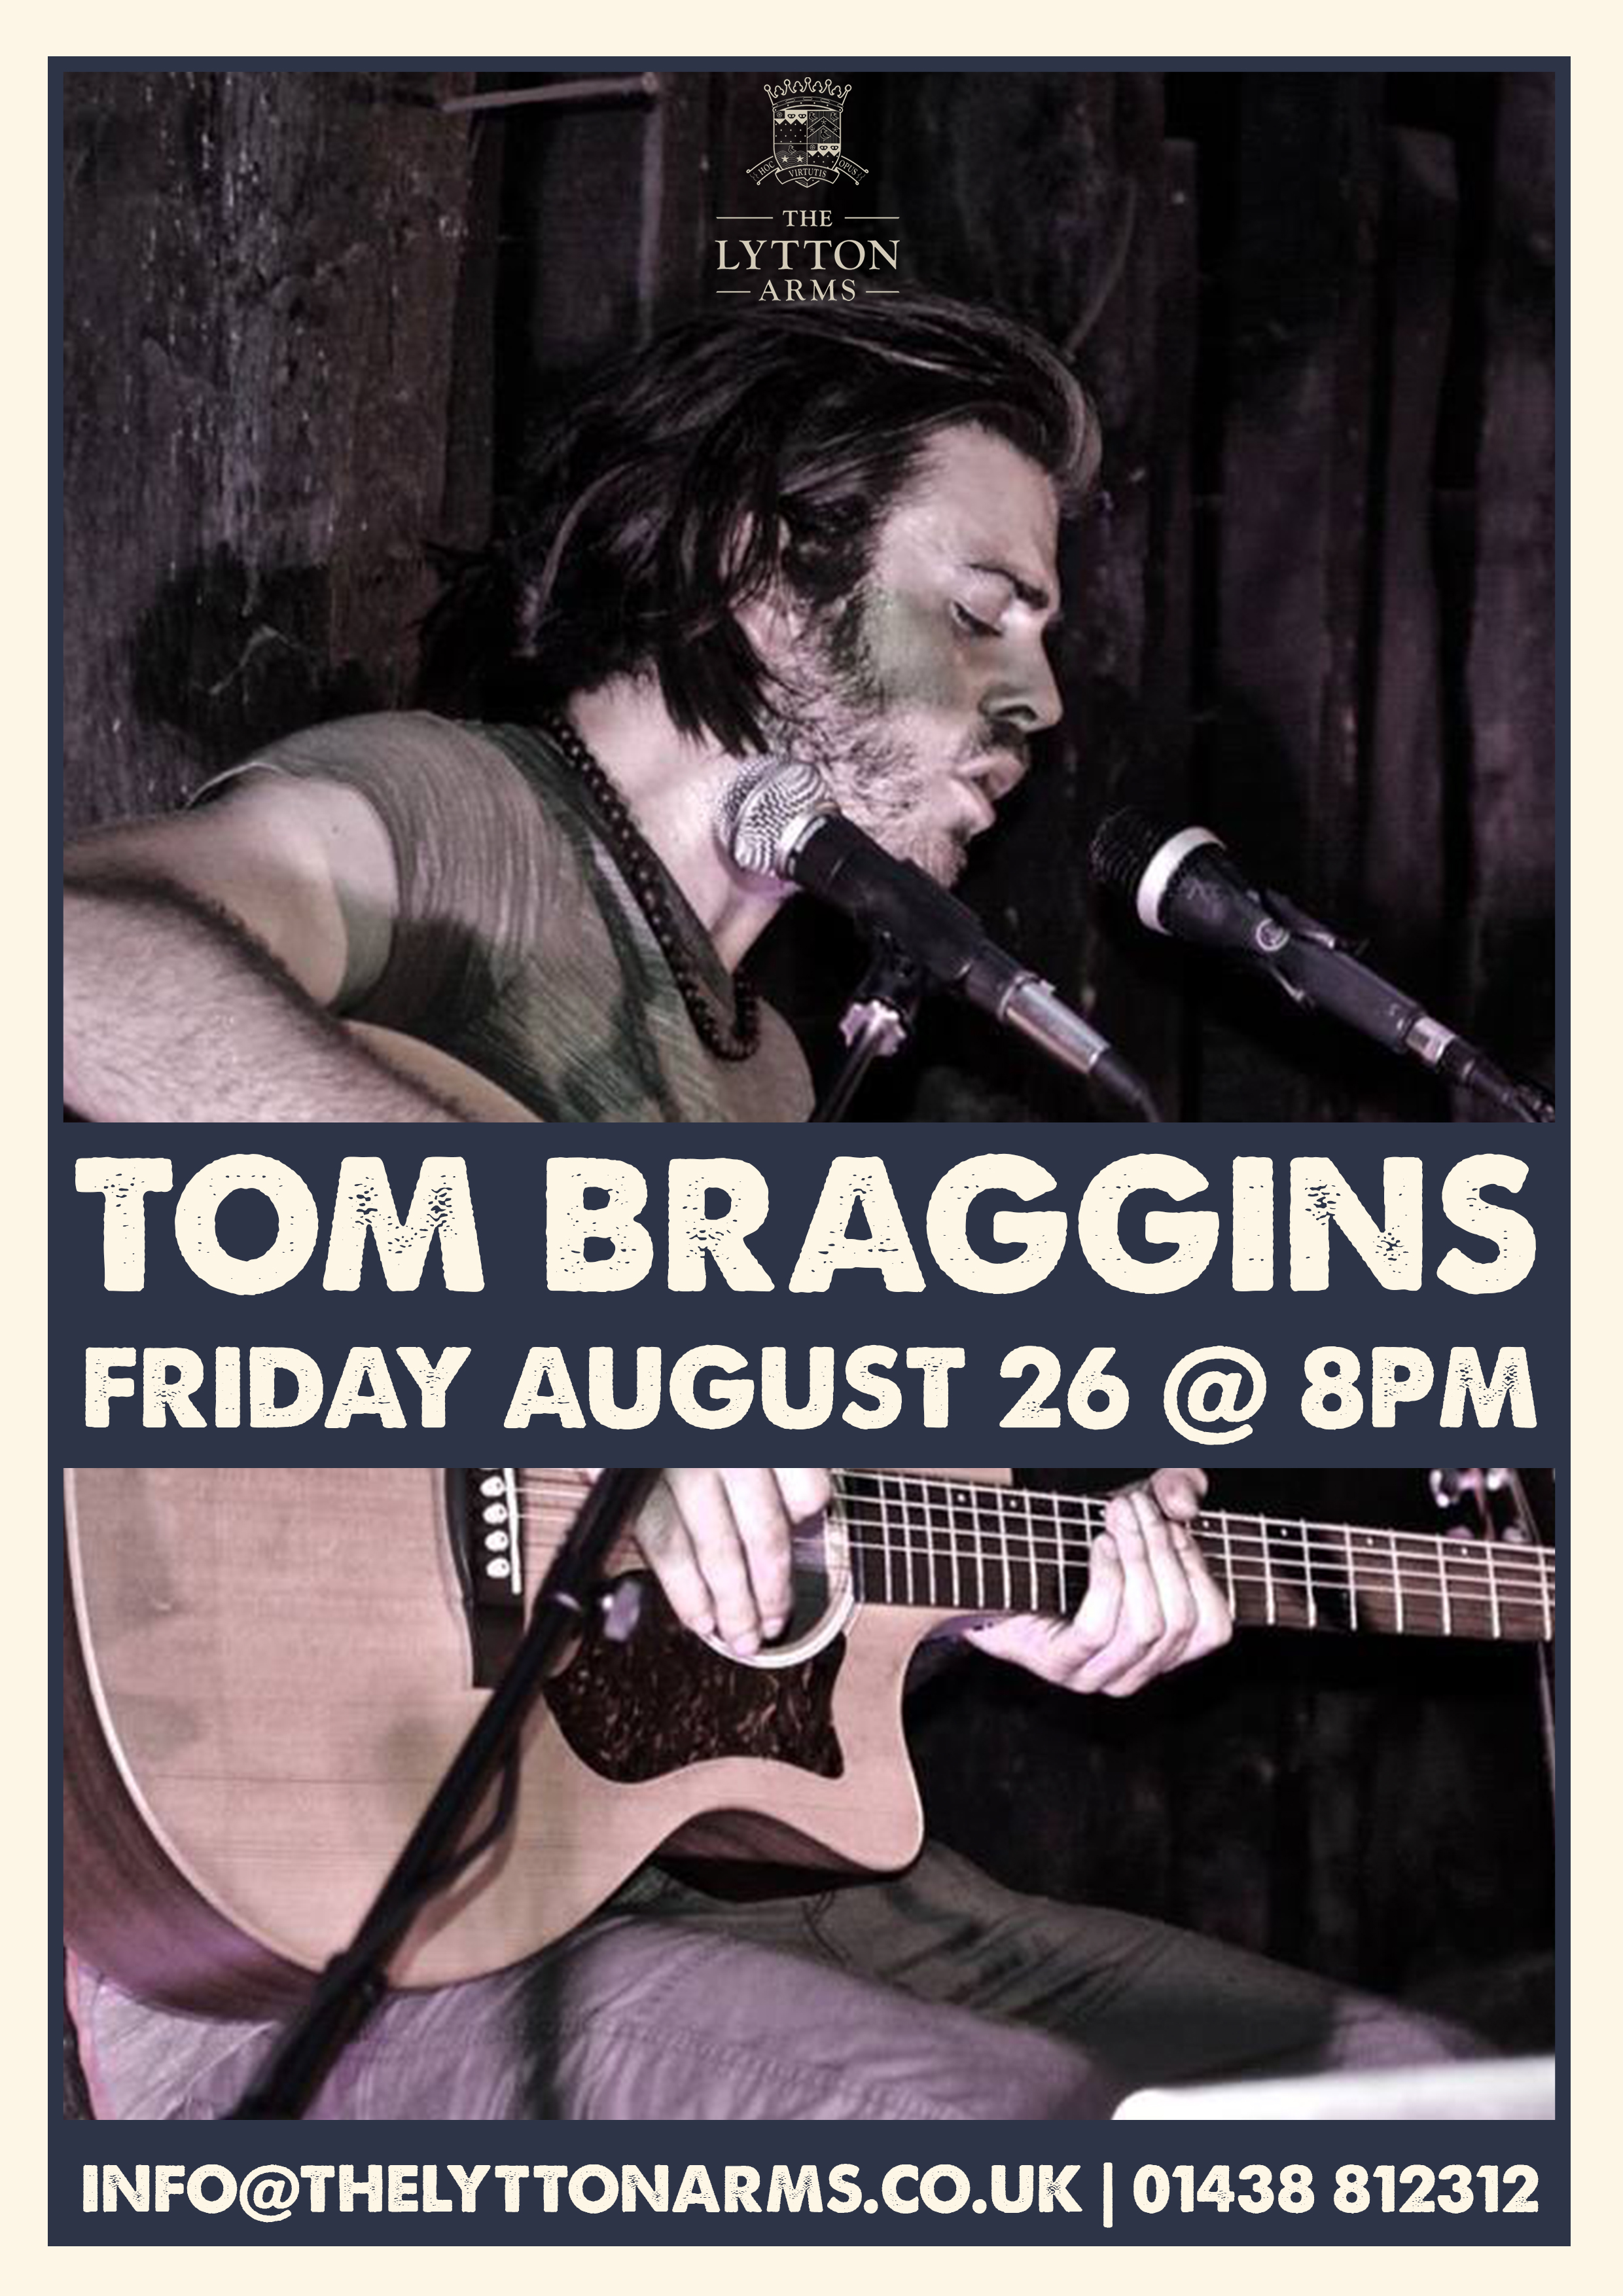 Live at The Lytton - Tom Braggins - August 26th